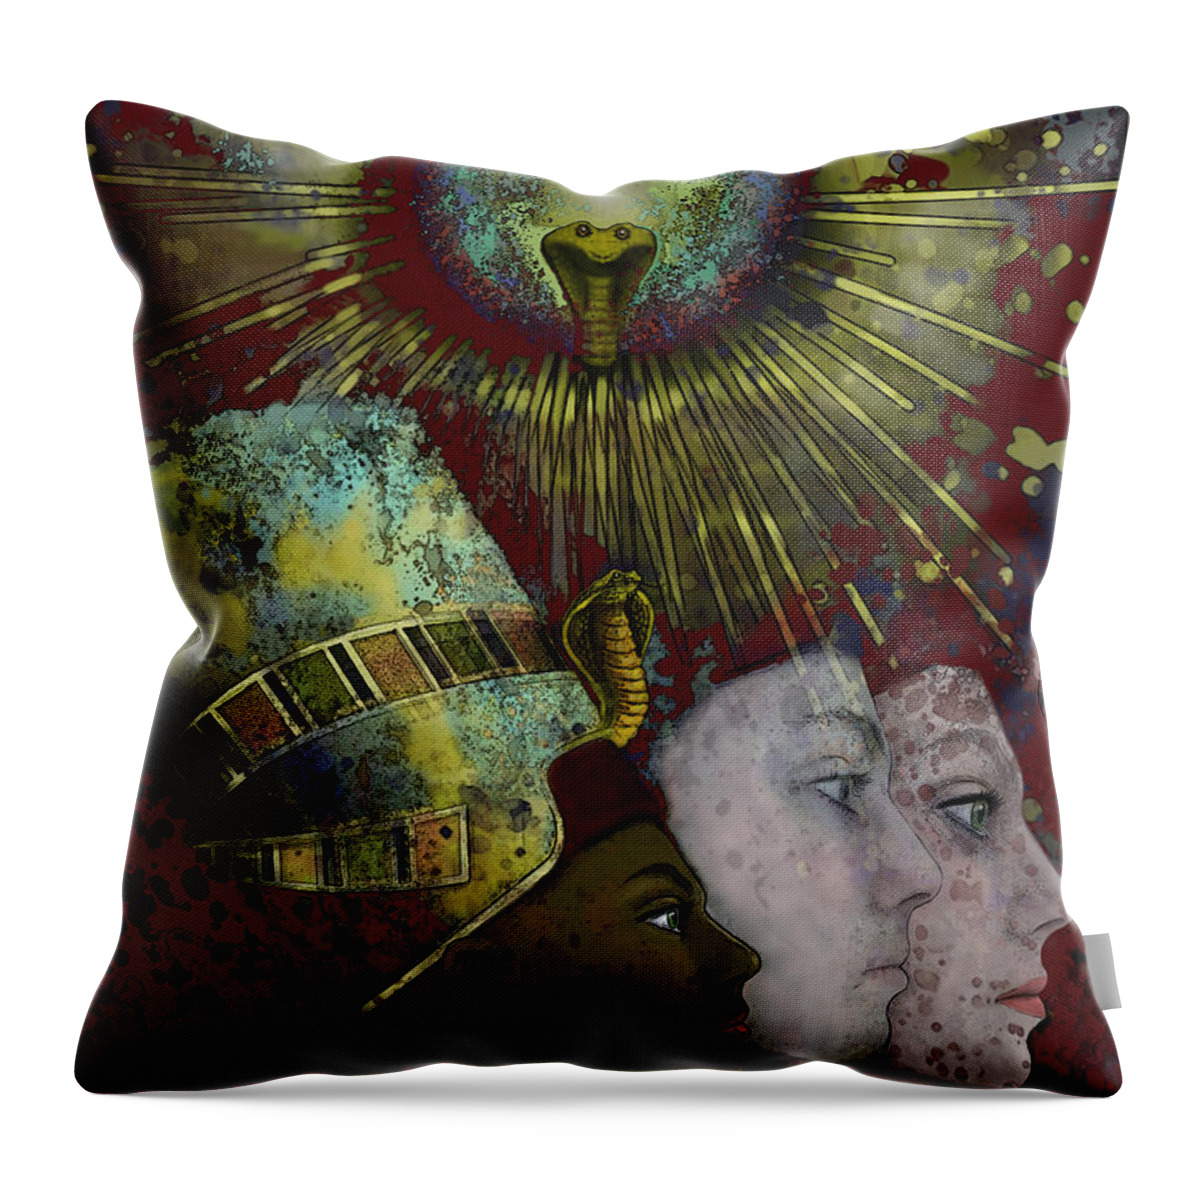 Reincarnate Throw Pillow featuring the digital art Reincarnate by Carol Jacobs